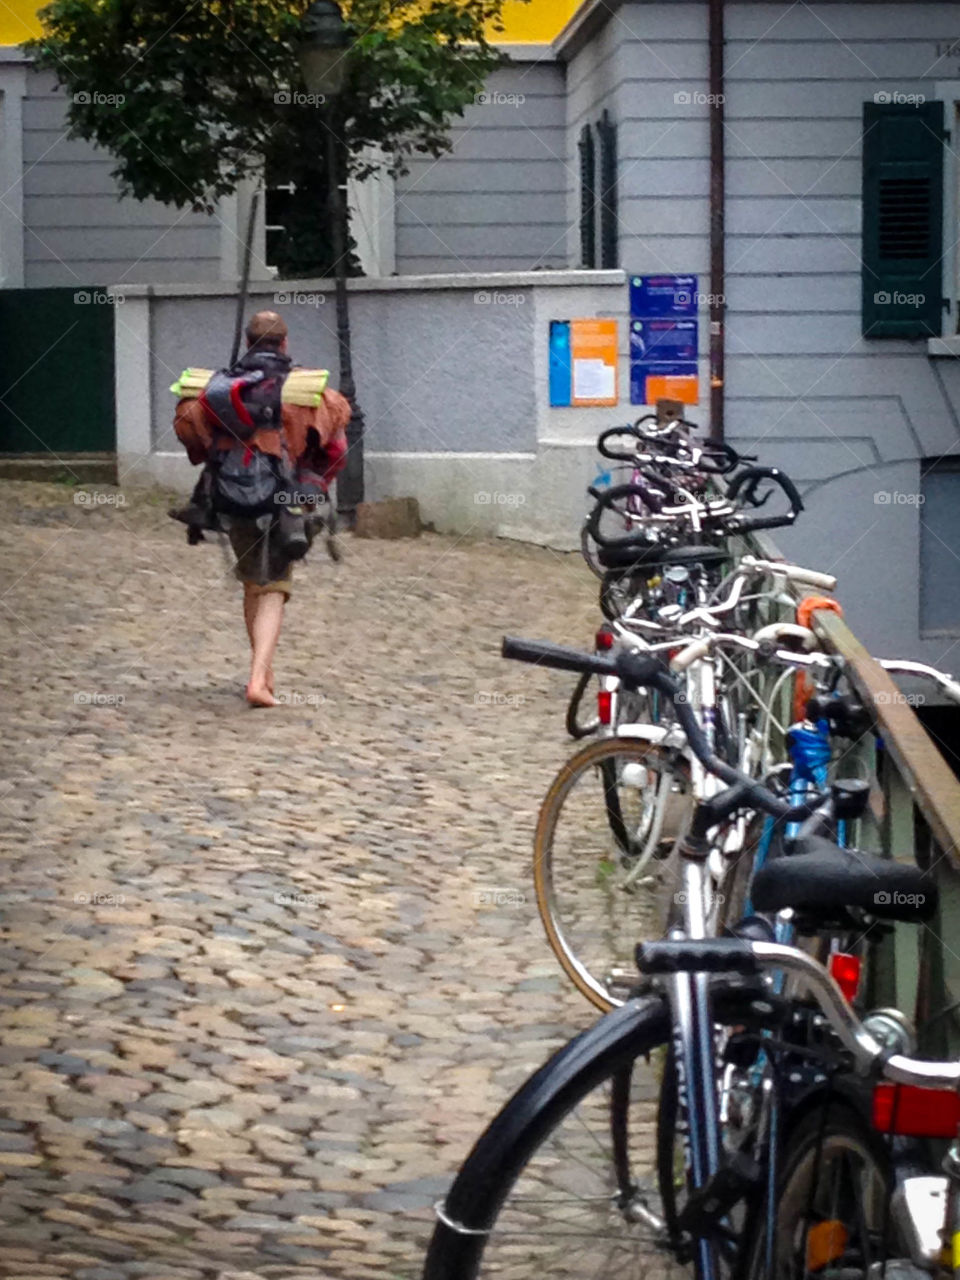 Commuting - walking vs biking